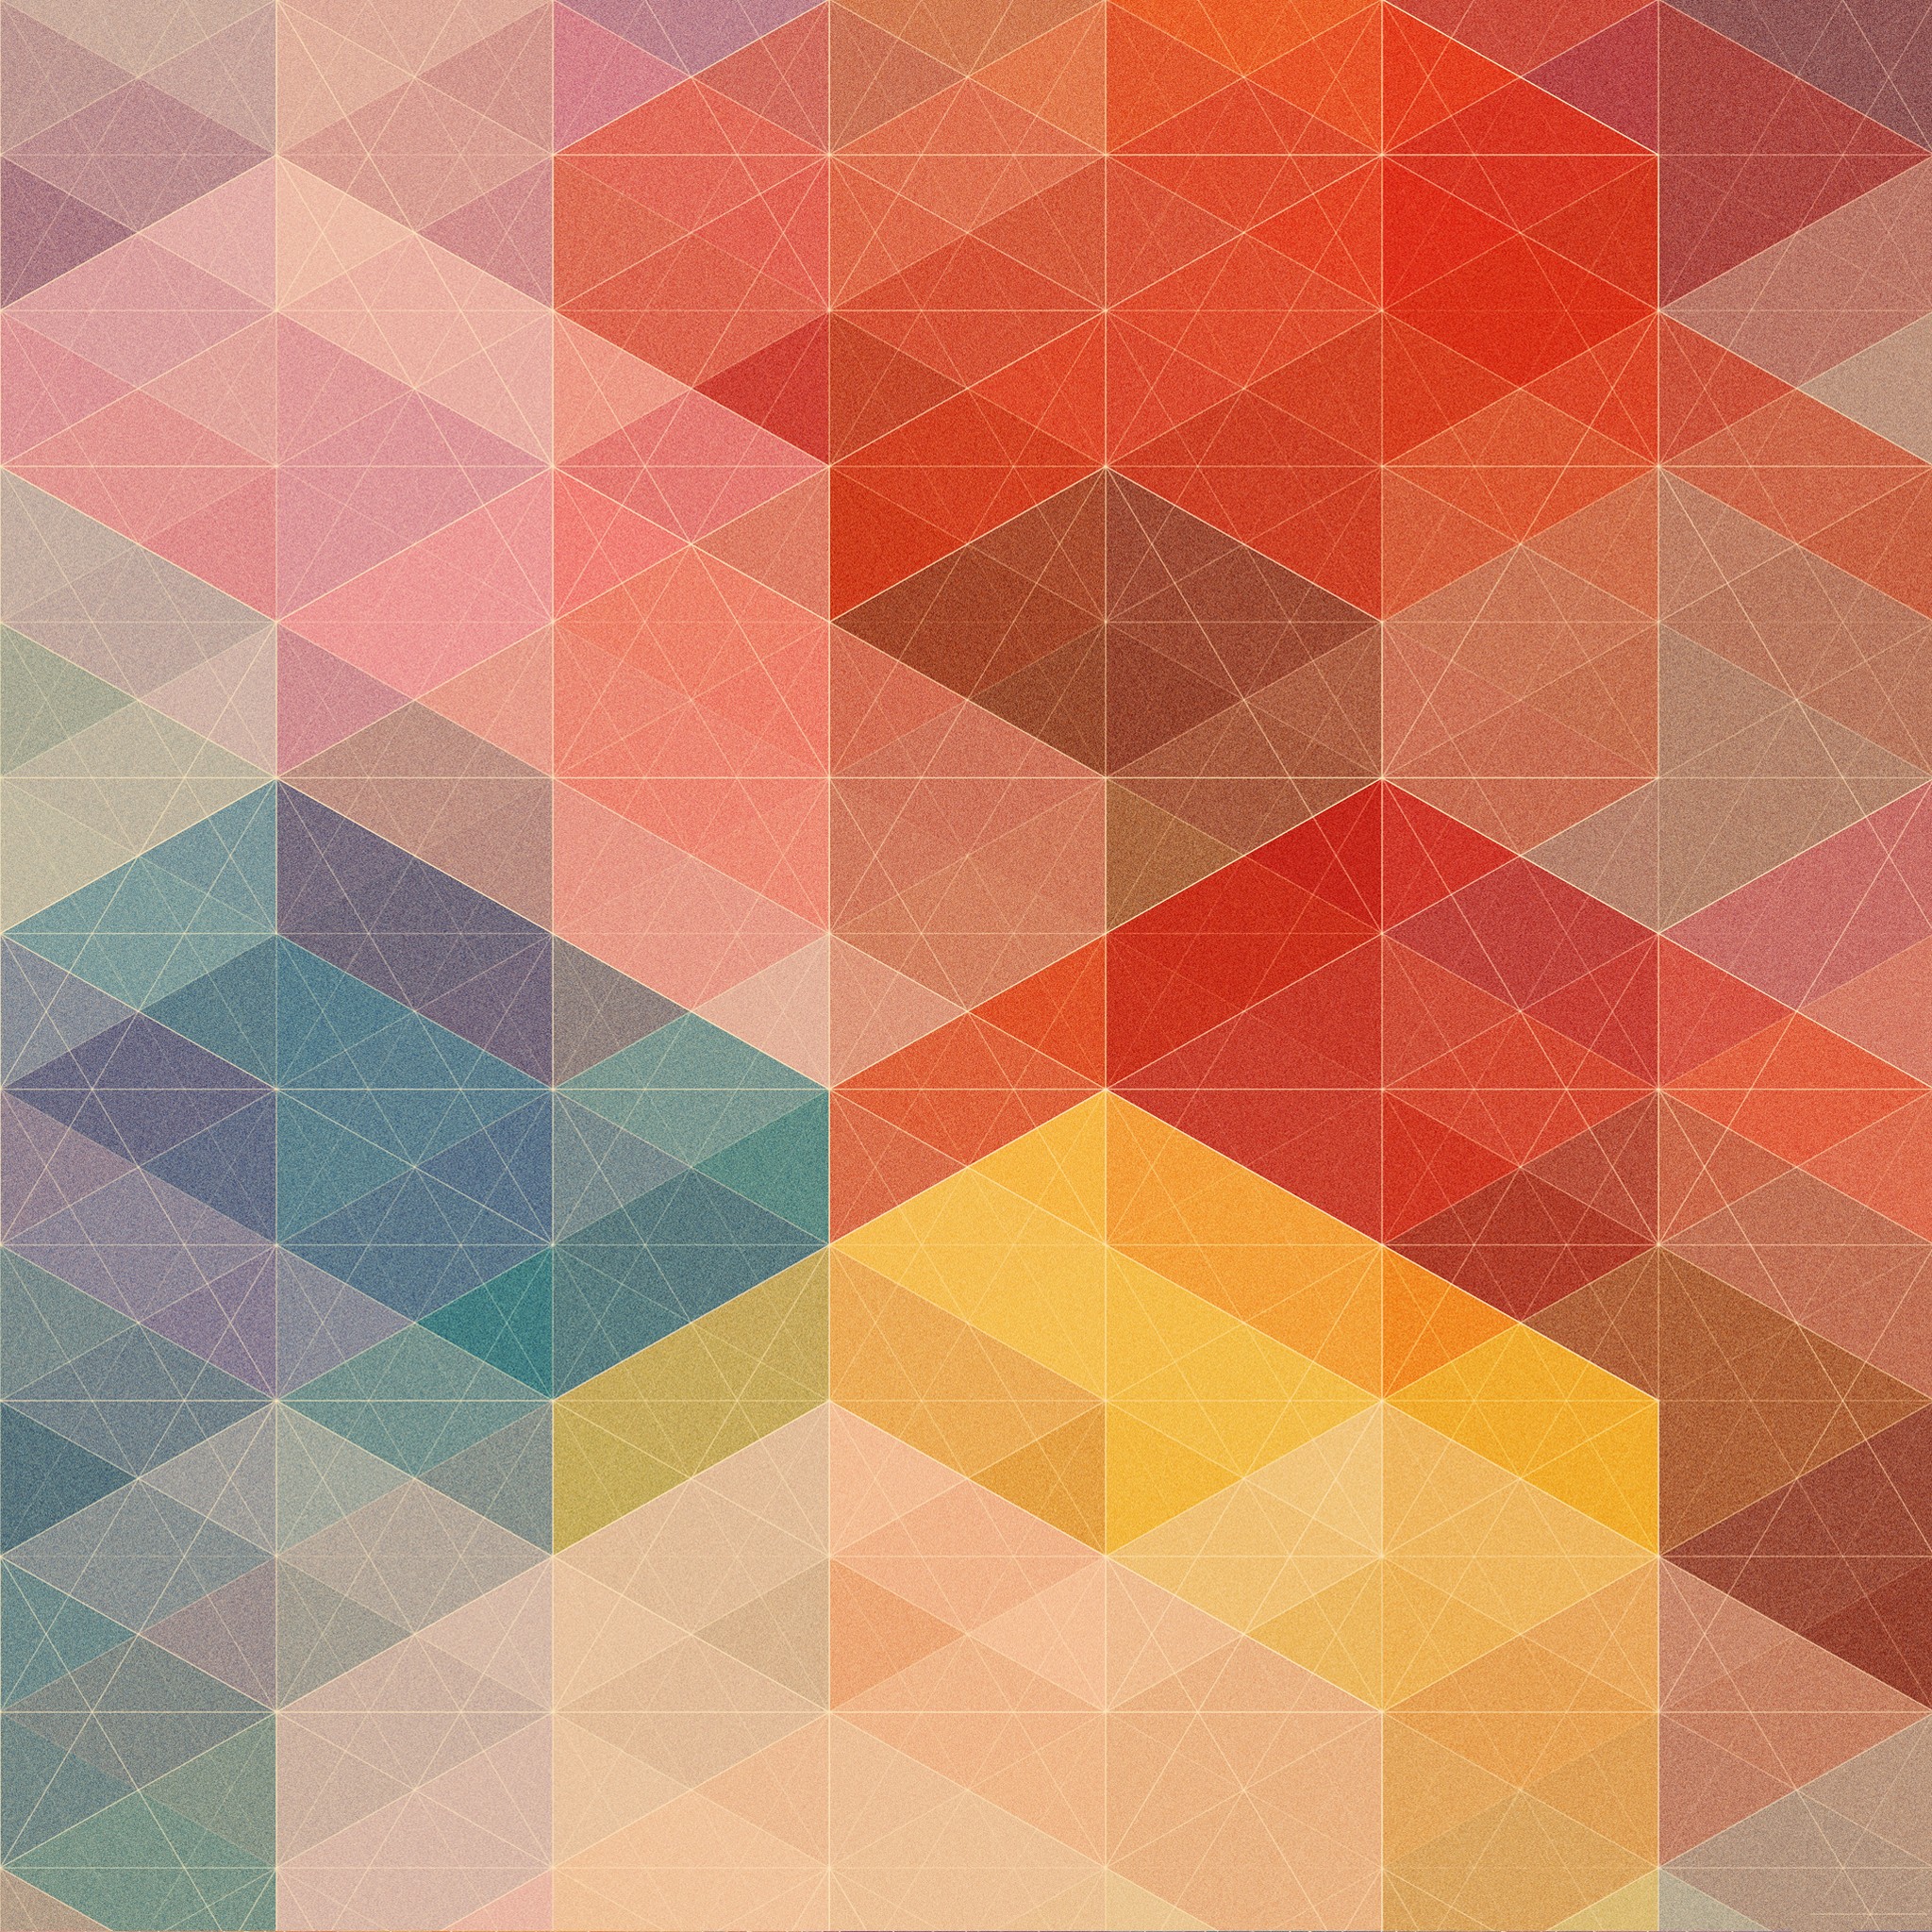 Ipad Pro Retina Stock Wallpaper 08 - Geometric Shapes Wallpaper Hd - HD Wallpaper 